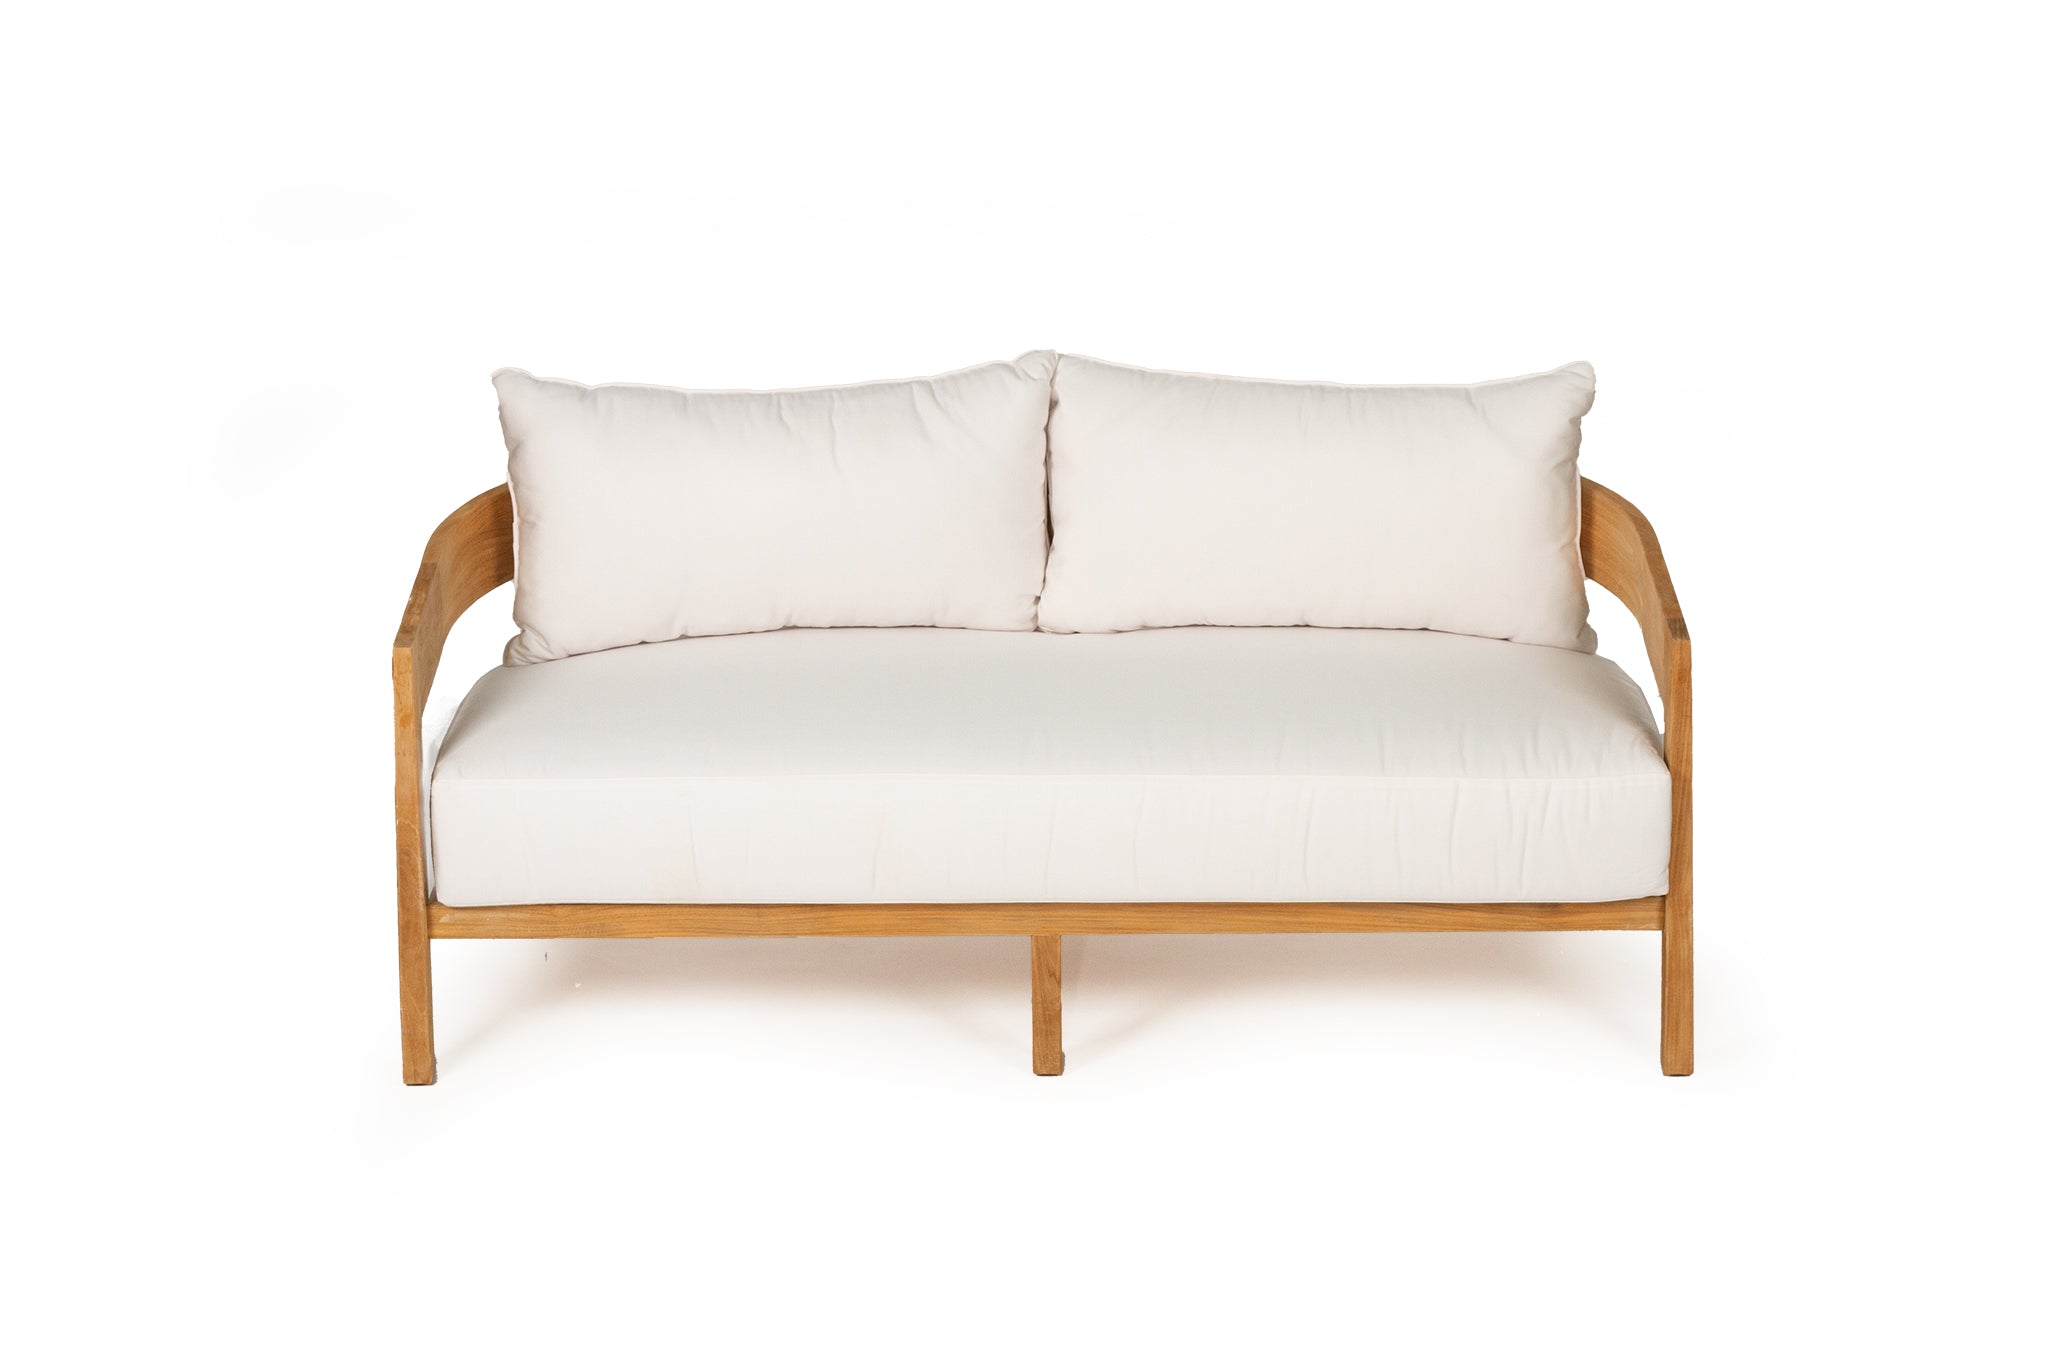 Queenscliff Teak Outdoor Sofa – 2 Seater – White